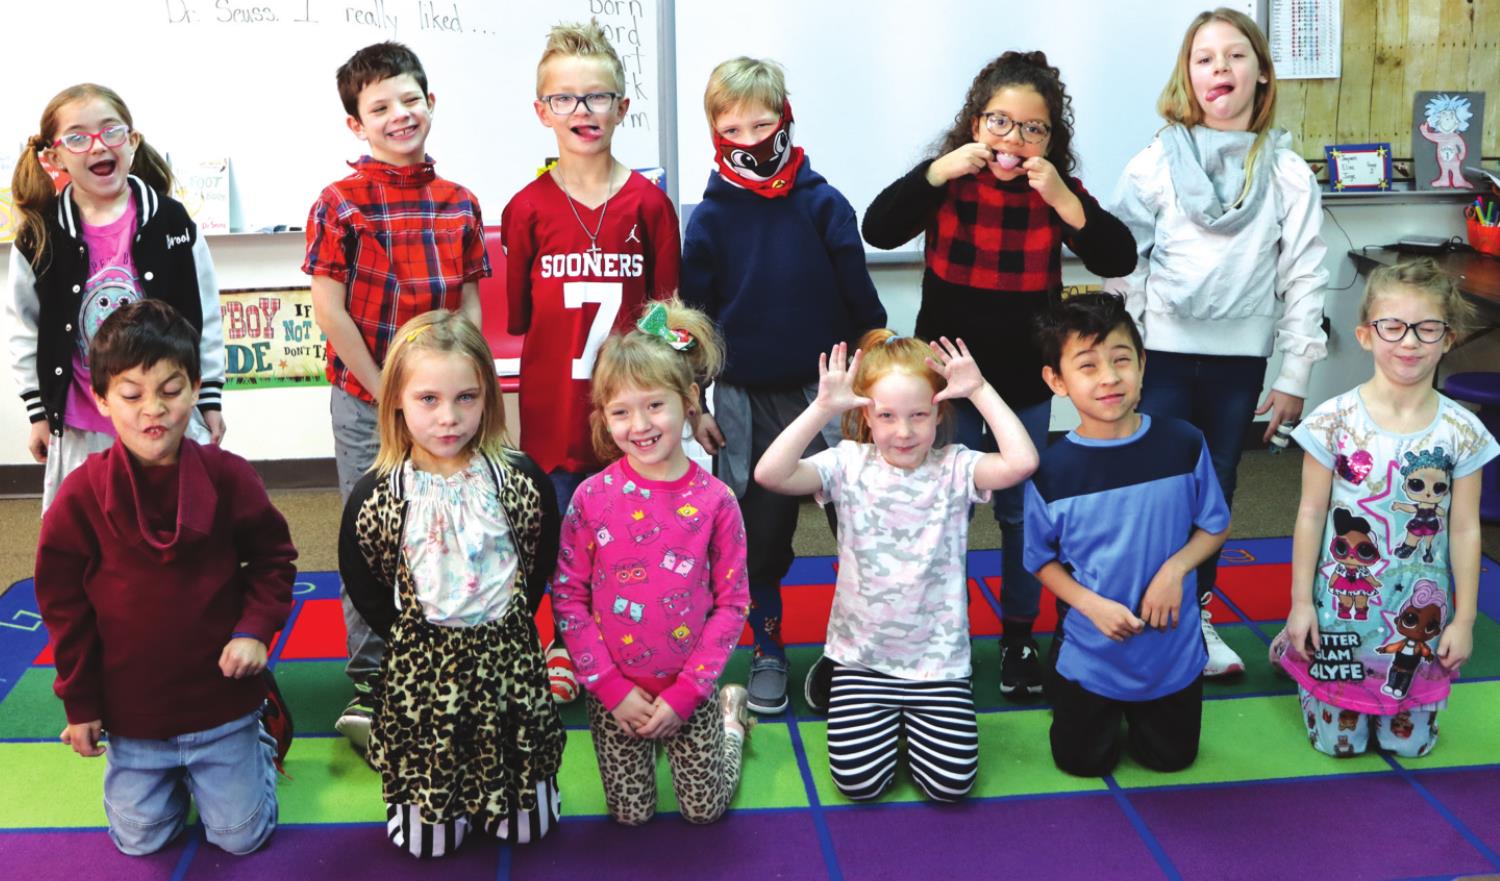 Members of Edie Visnieski’s first grade class